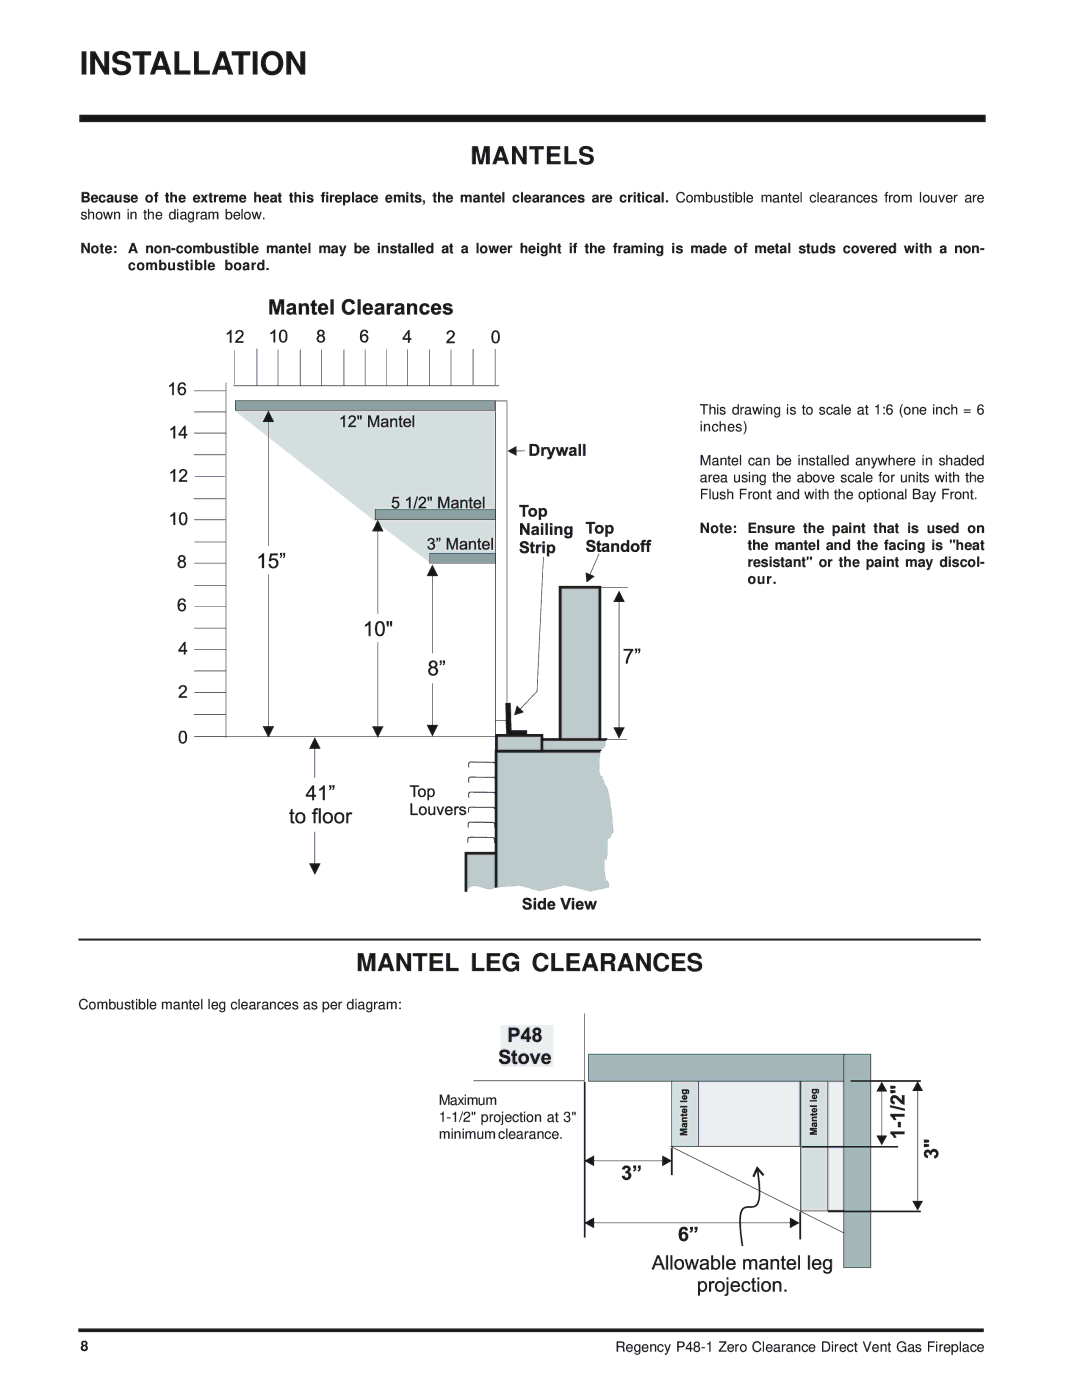 Regency P48-1 installation manual Mantels, Mantel LEG Clearances 